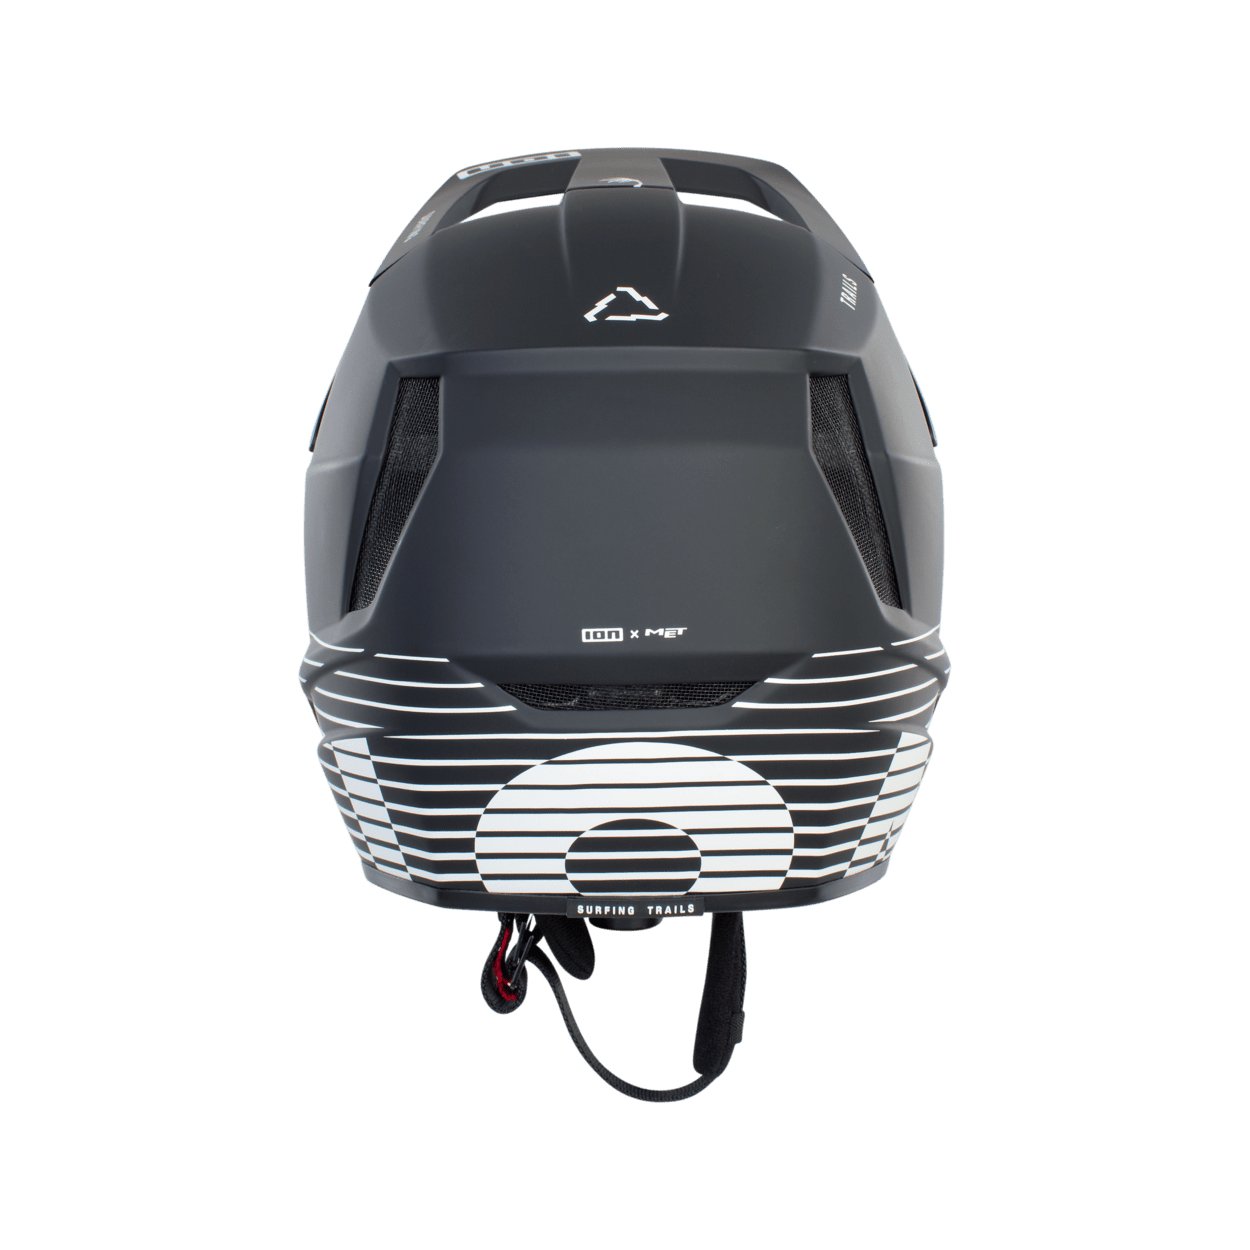 ION MTB Helmet Fullface Scrub Amp 2024 - Worthing Watersports - 9010583031095 - Helmets - ION Bike